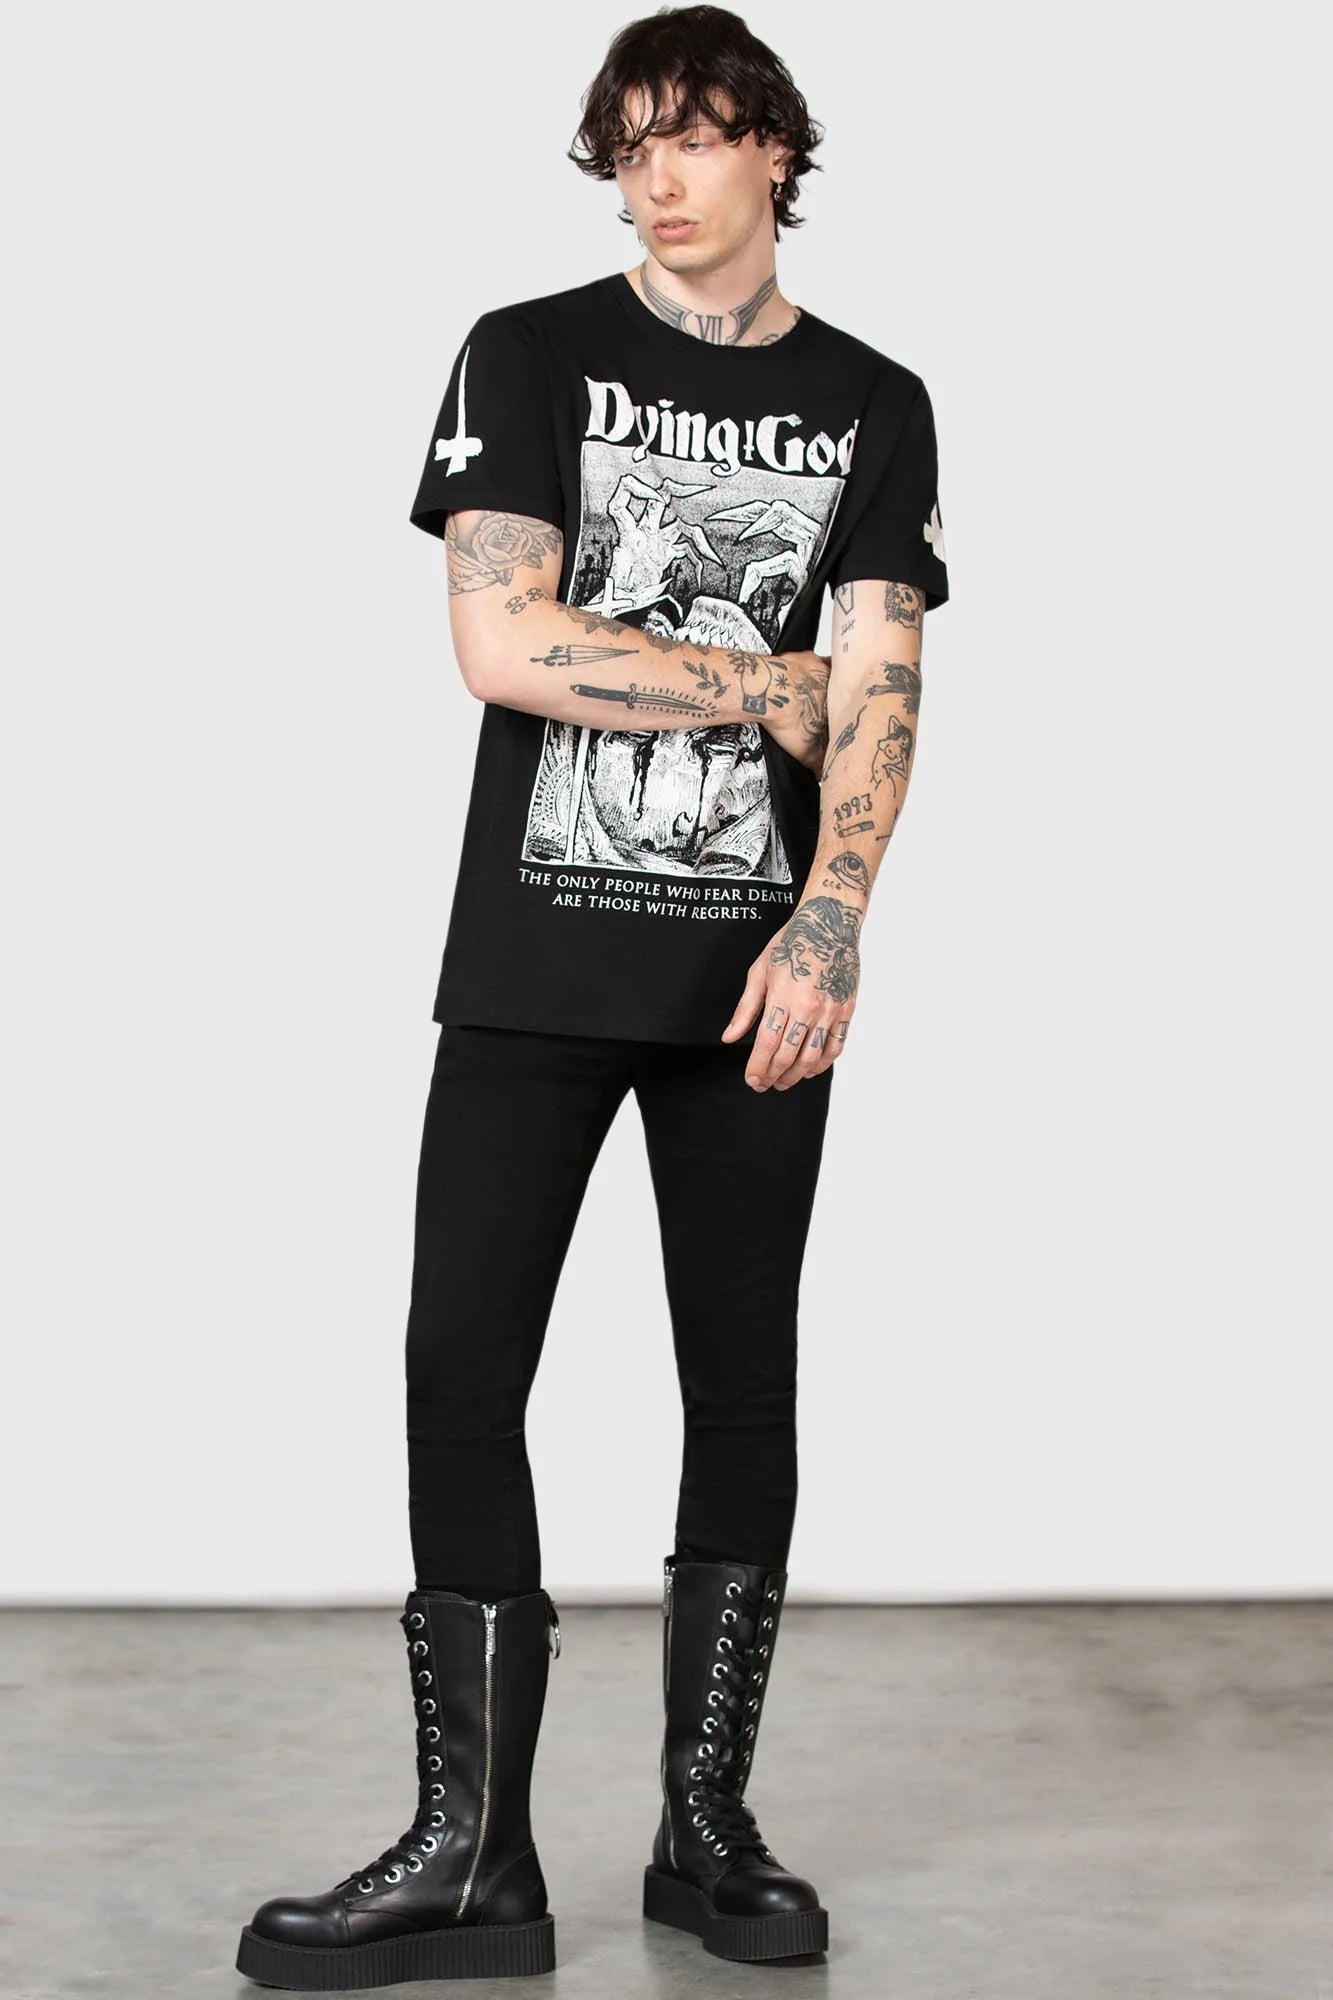 DYING GOD Shirt von Killstar mit Scary Print auf schwarz.